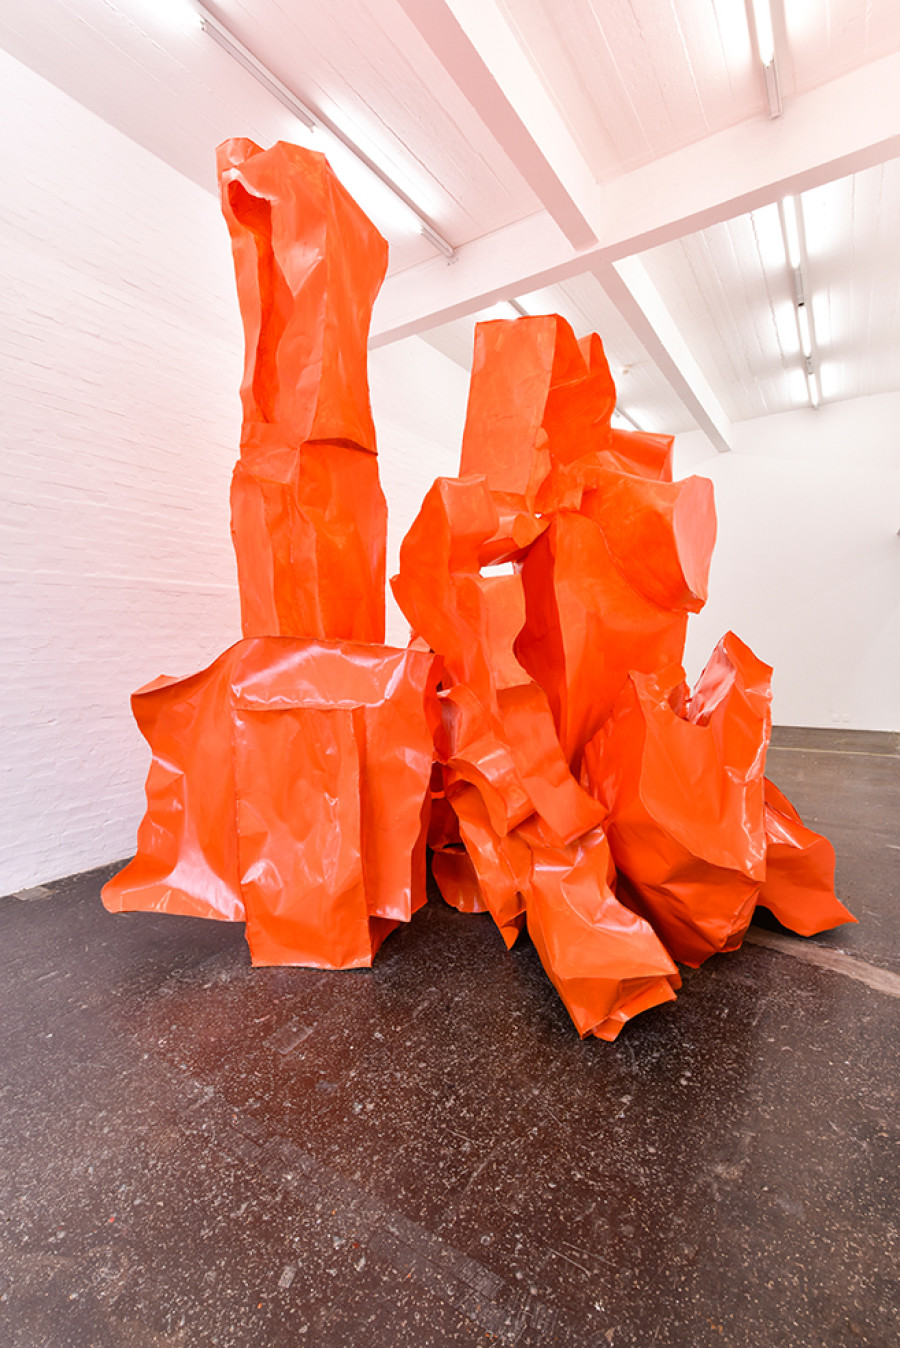 Simone Holliger, Skulptur (neu verhandelt), 2020. Courtesy: the artist; Gallery Nicolas Krupp, Basel. Photo: Kunst Halle Sankt Gallen, Sebastian Schaub